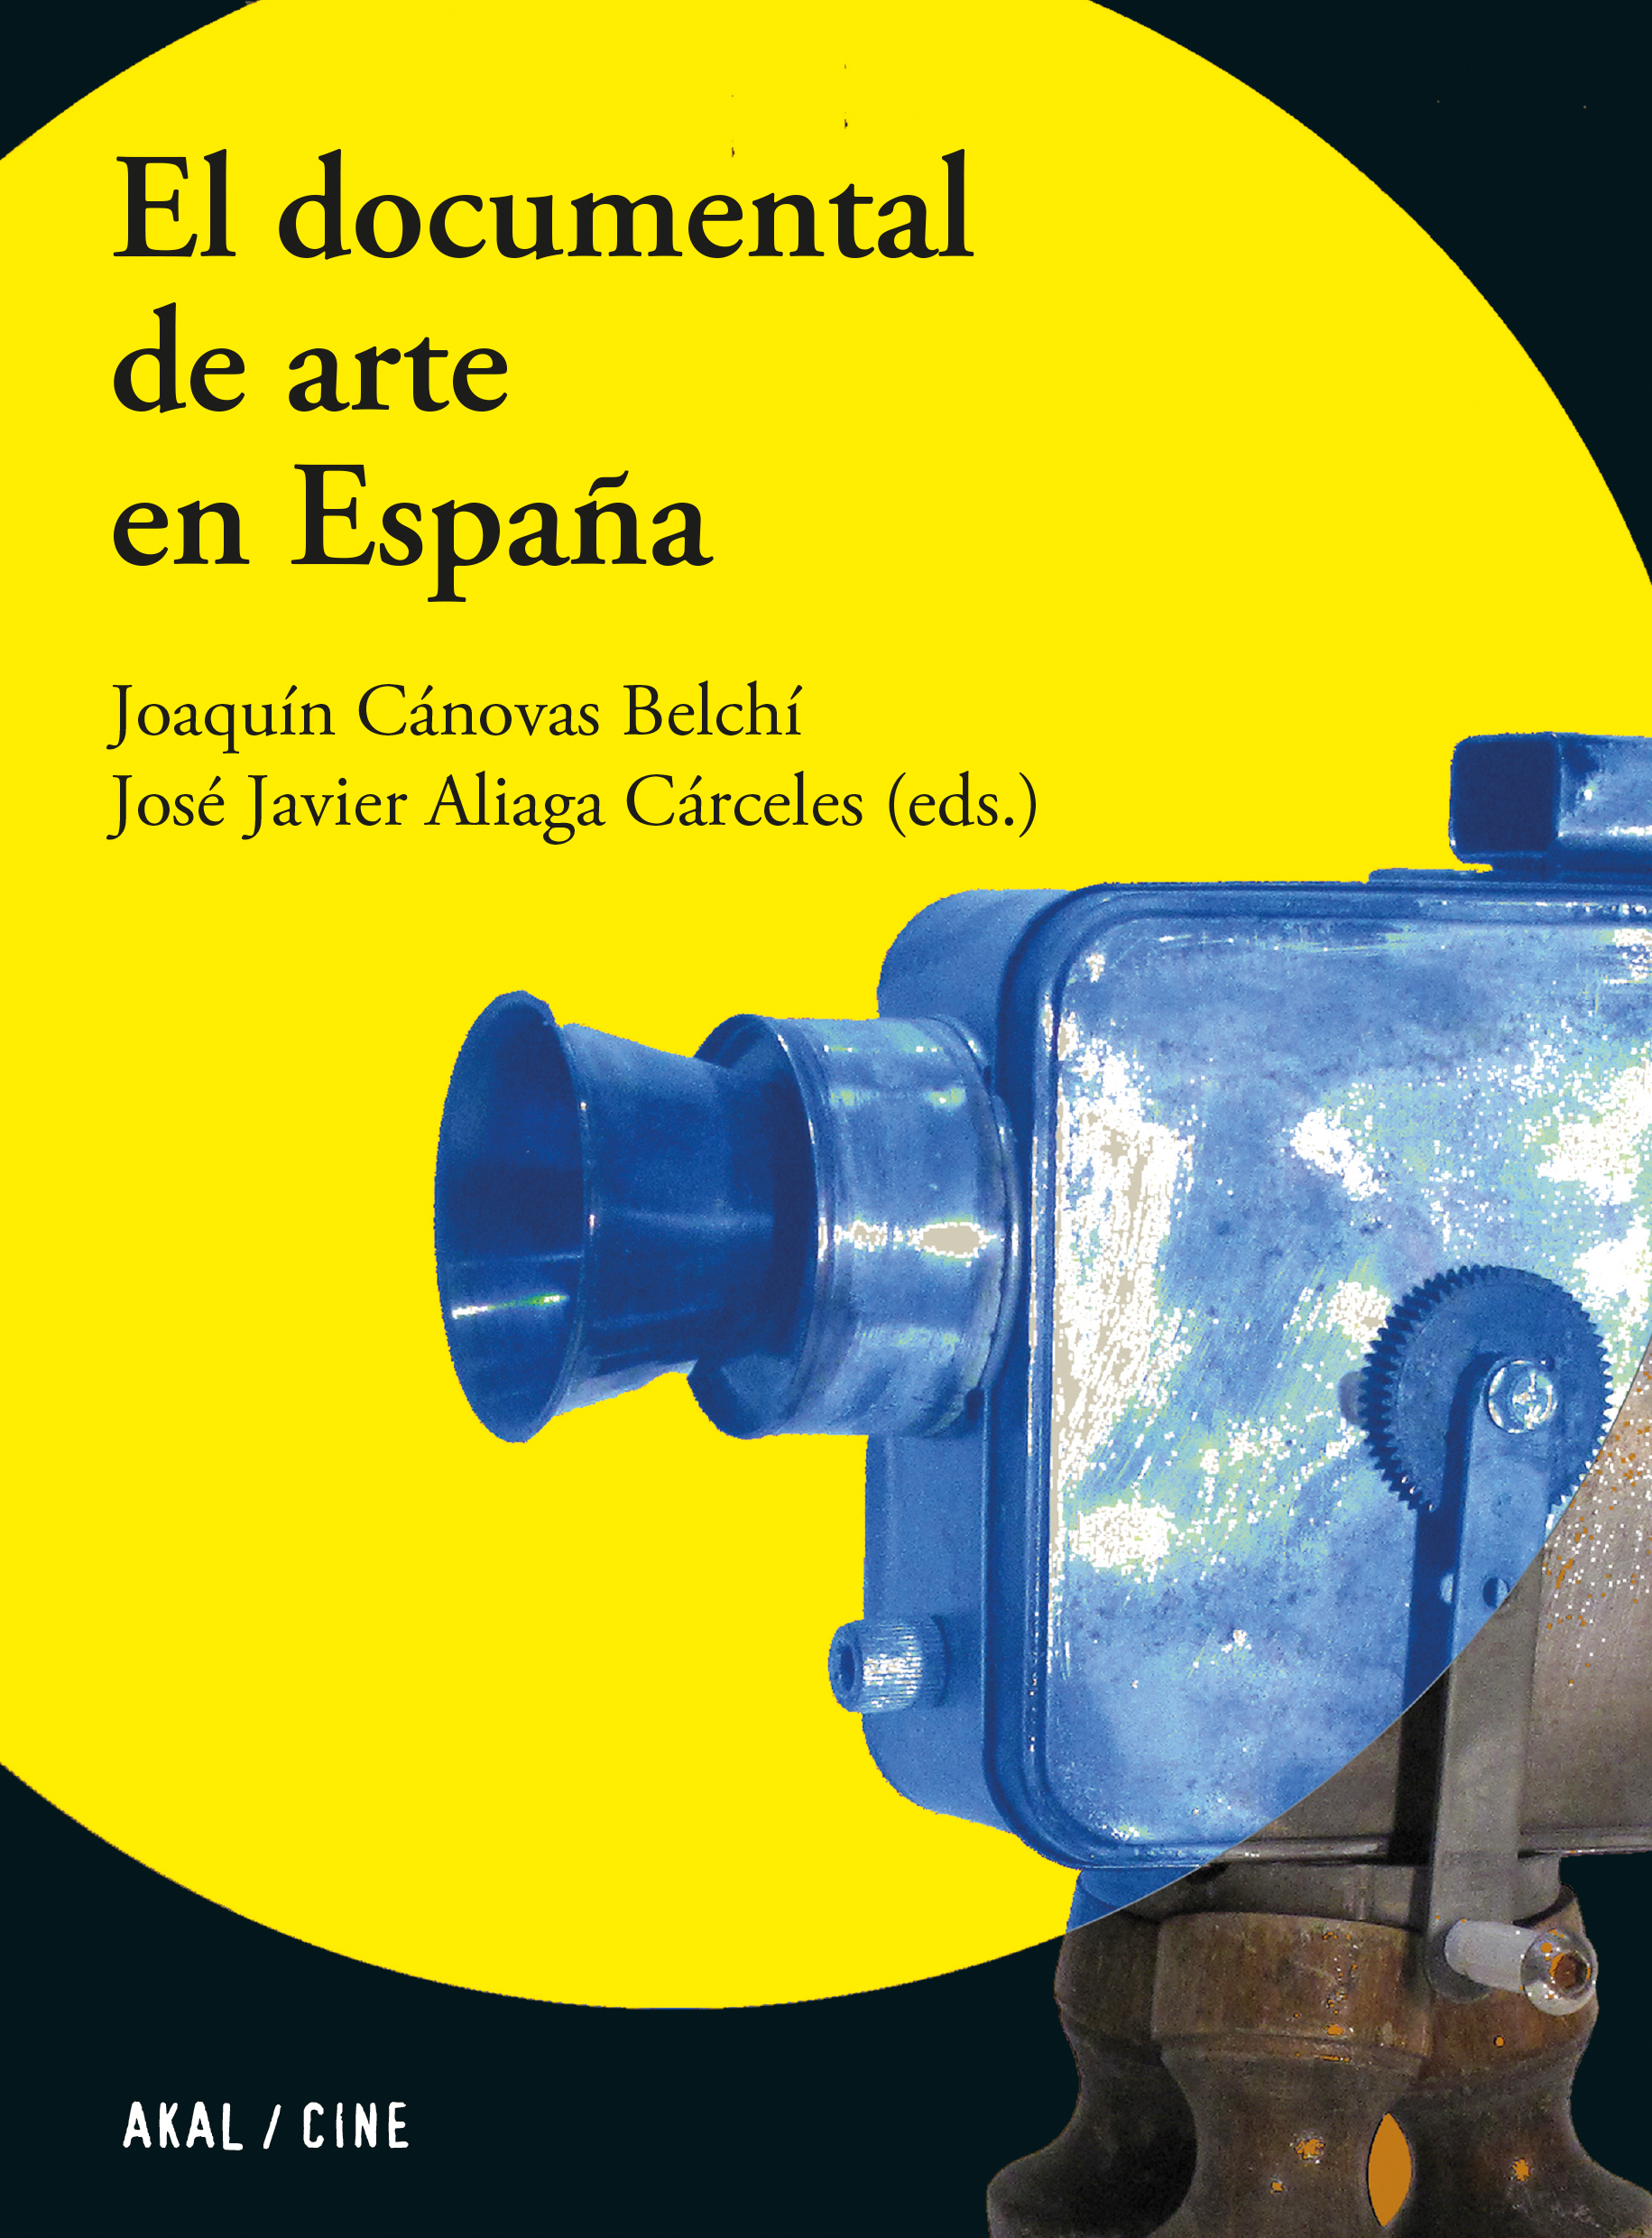 EL DOCUMENTAL DE ARTE EN ESPAÑA - Joaquín Canovas Belchi | José Aliaga Cárceles